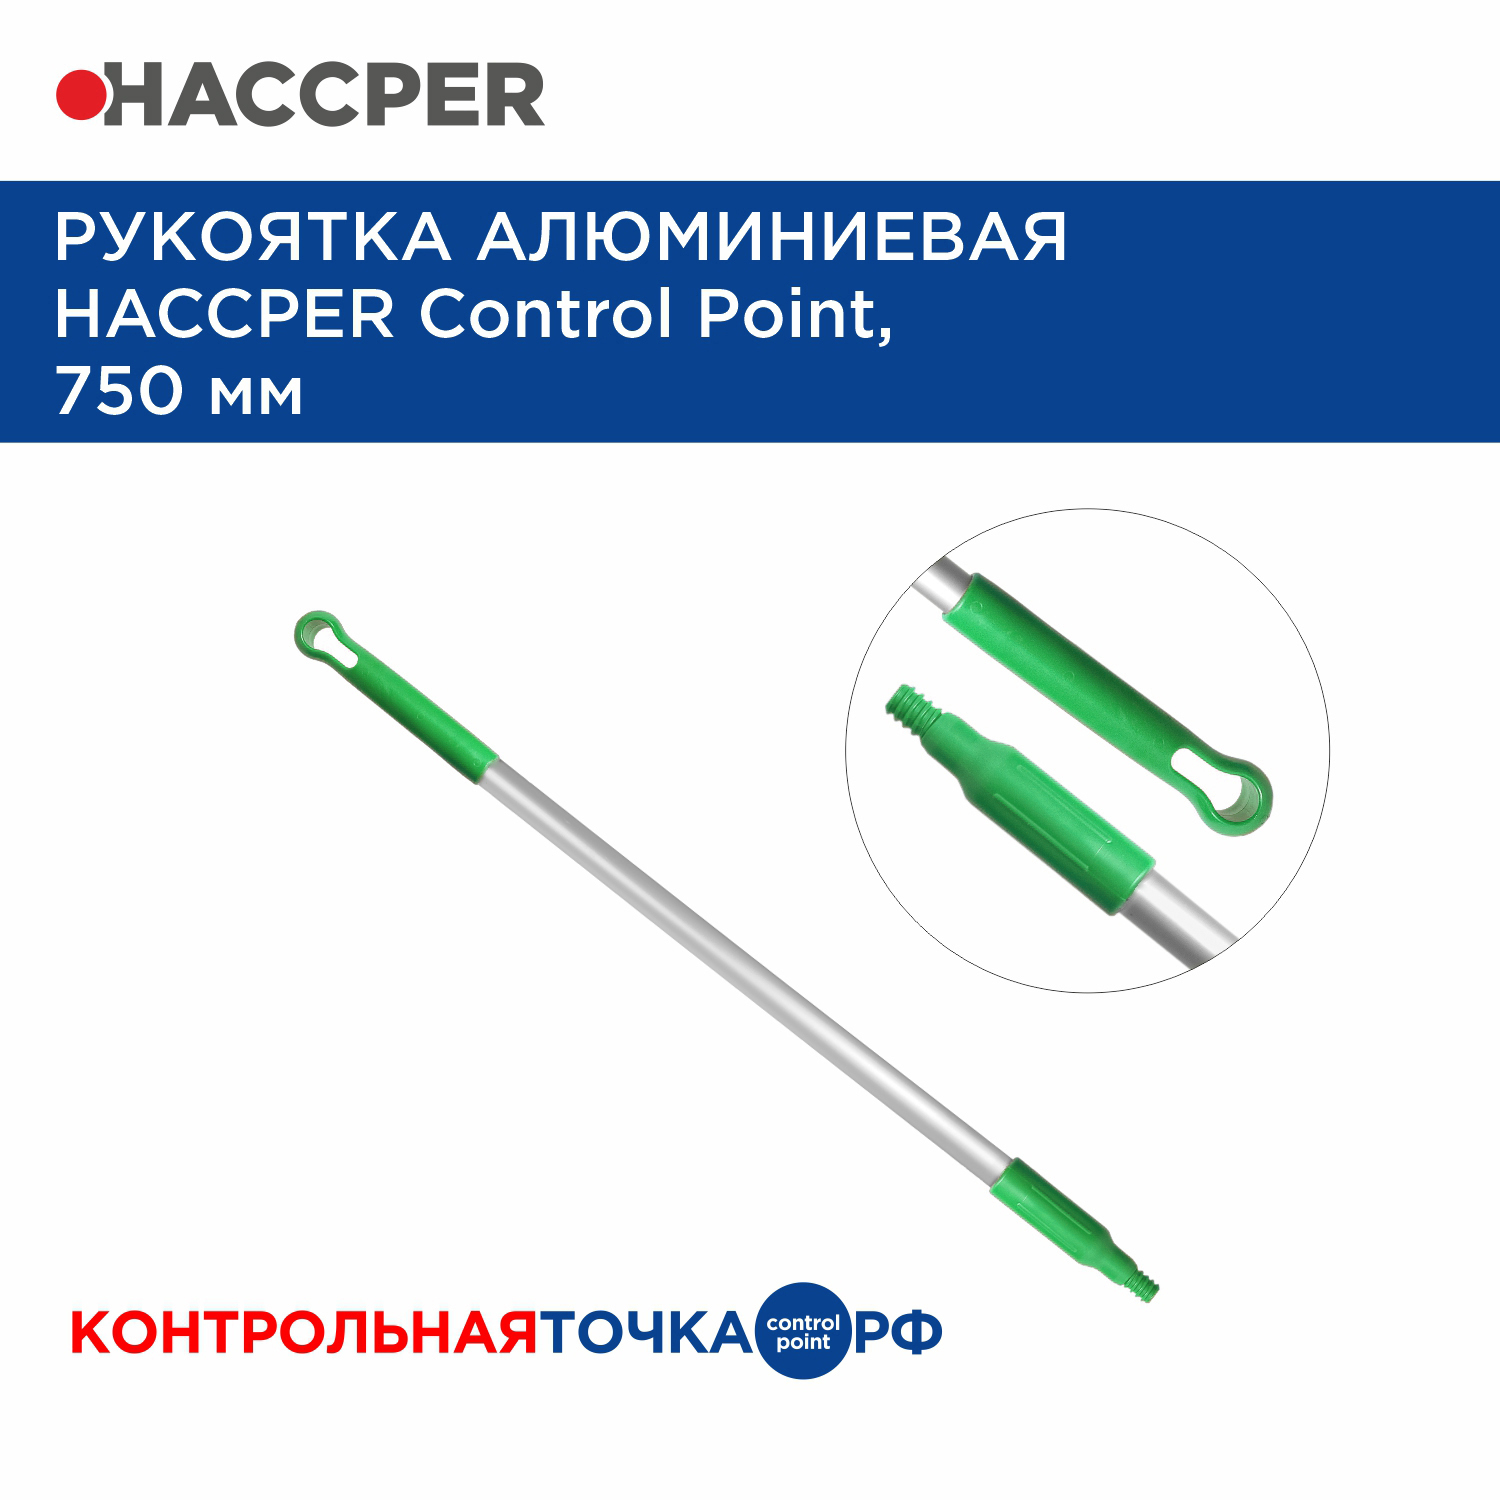 Рукоятка HACCPER Control Point алюминиевая, 750 мм, зеленый